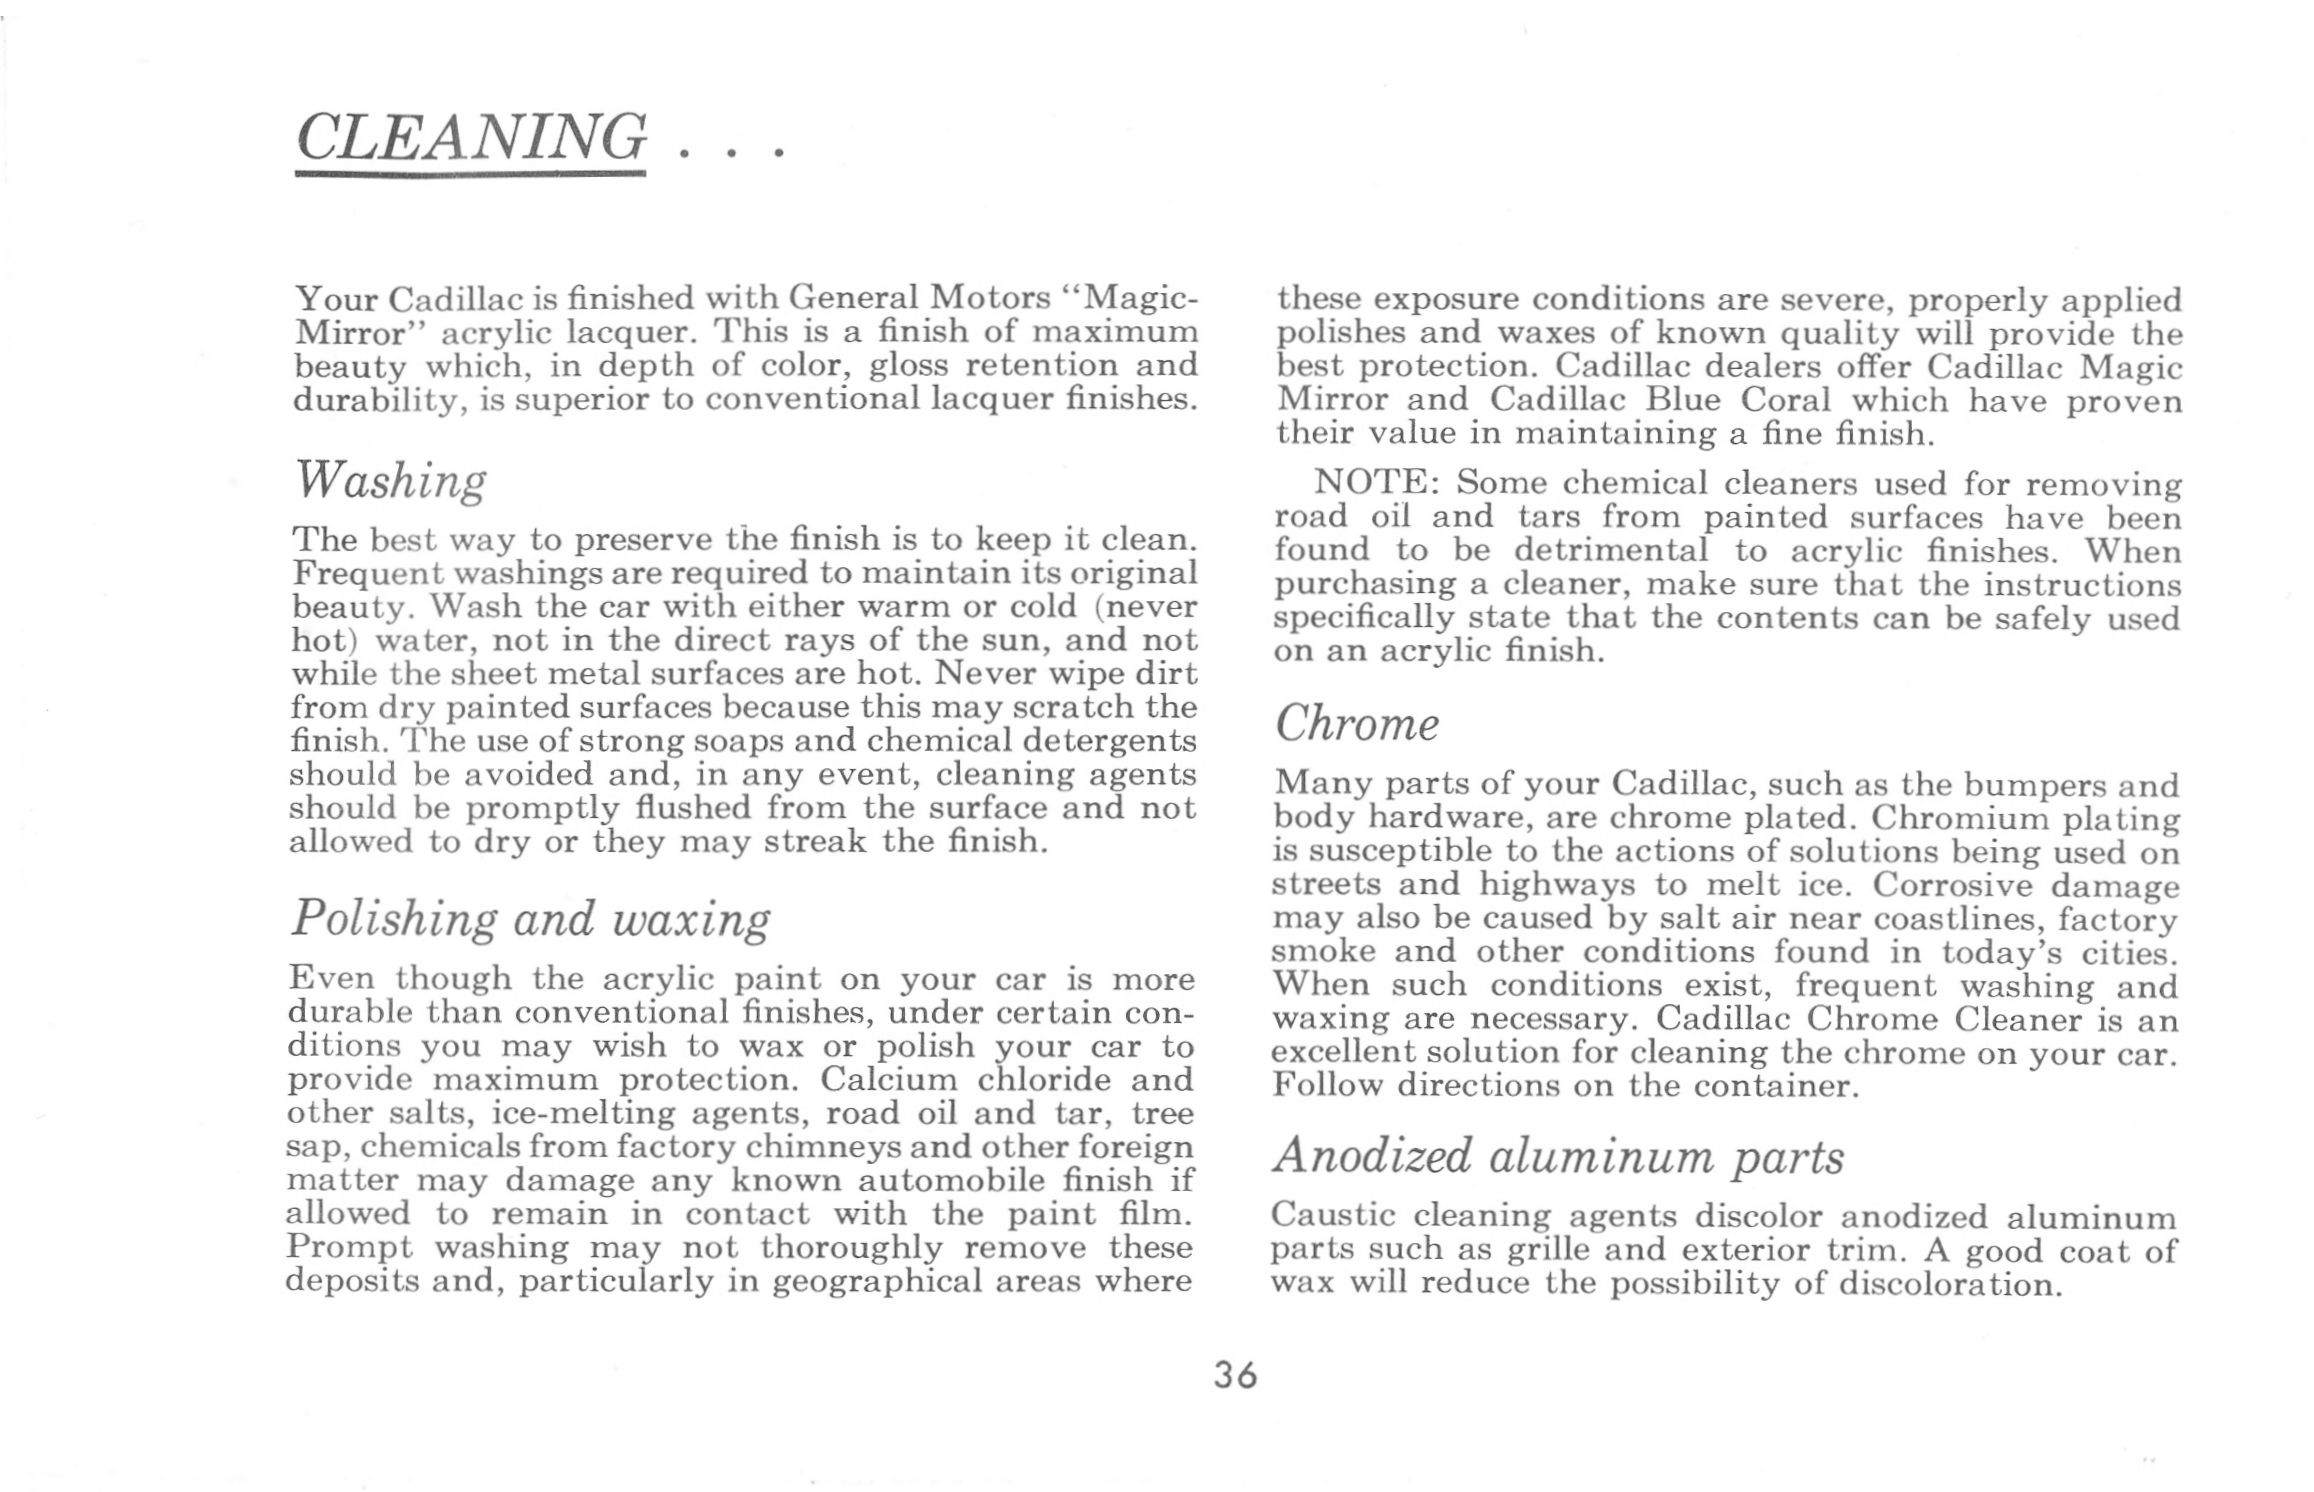 n_1962 Cadillac Owner's Manual-Page 36.jpg